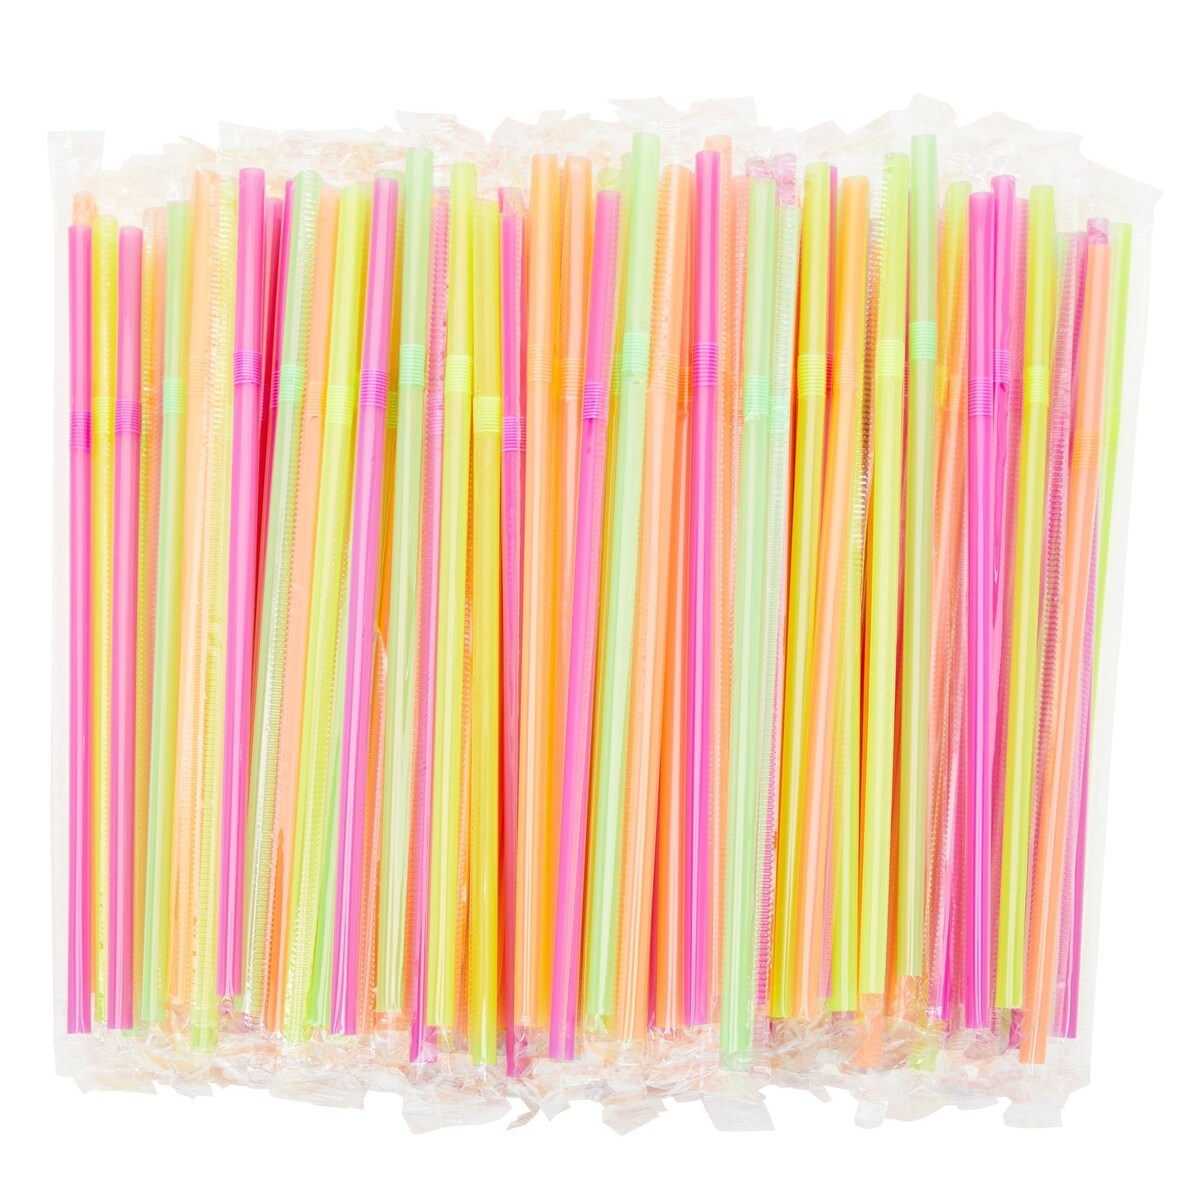 Unique Industries Hot Pink Flexible Plastic Straws, 50 Count 